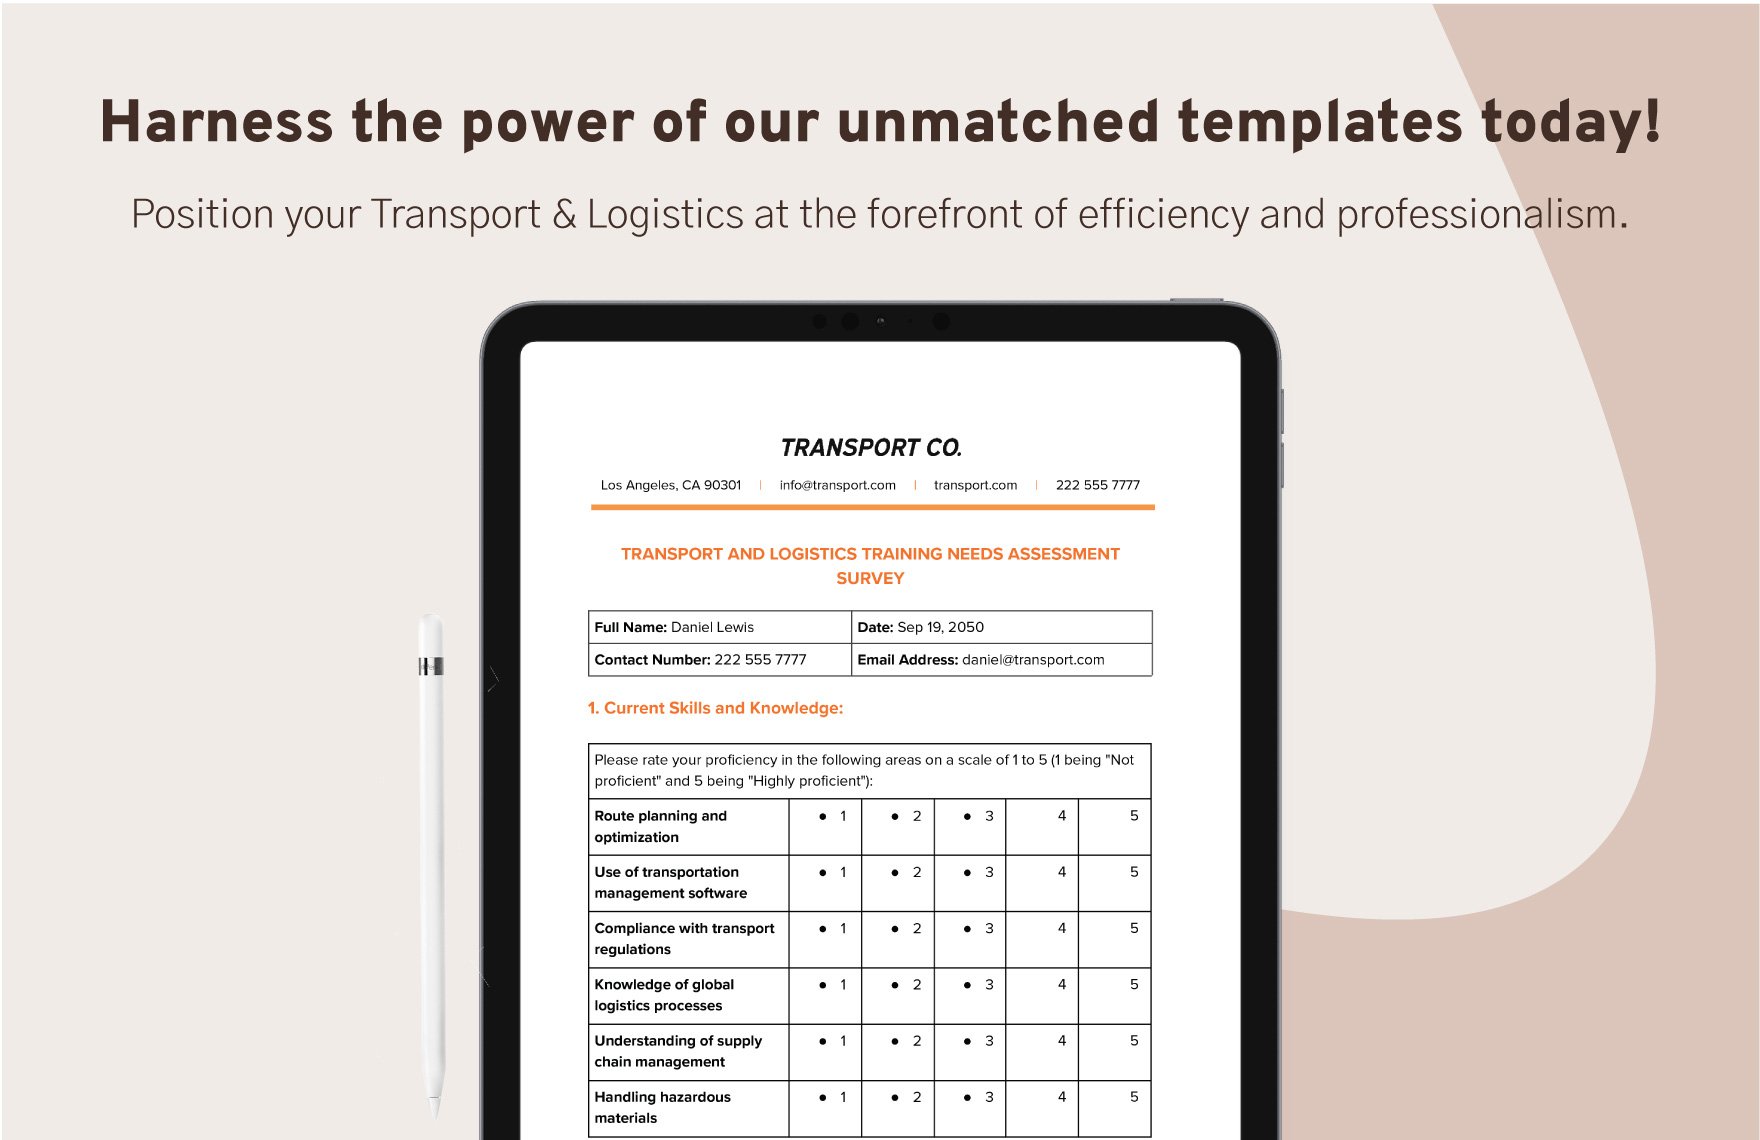 Transport and Logistics Training Needs Assessment Survey Template